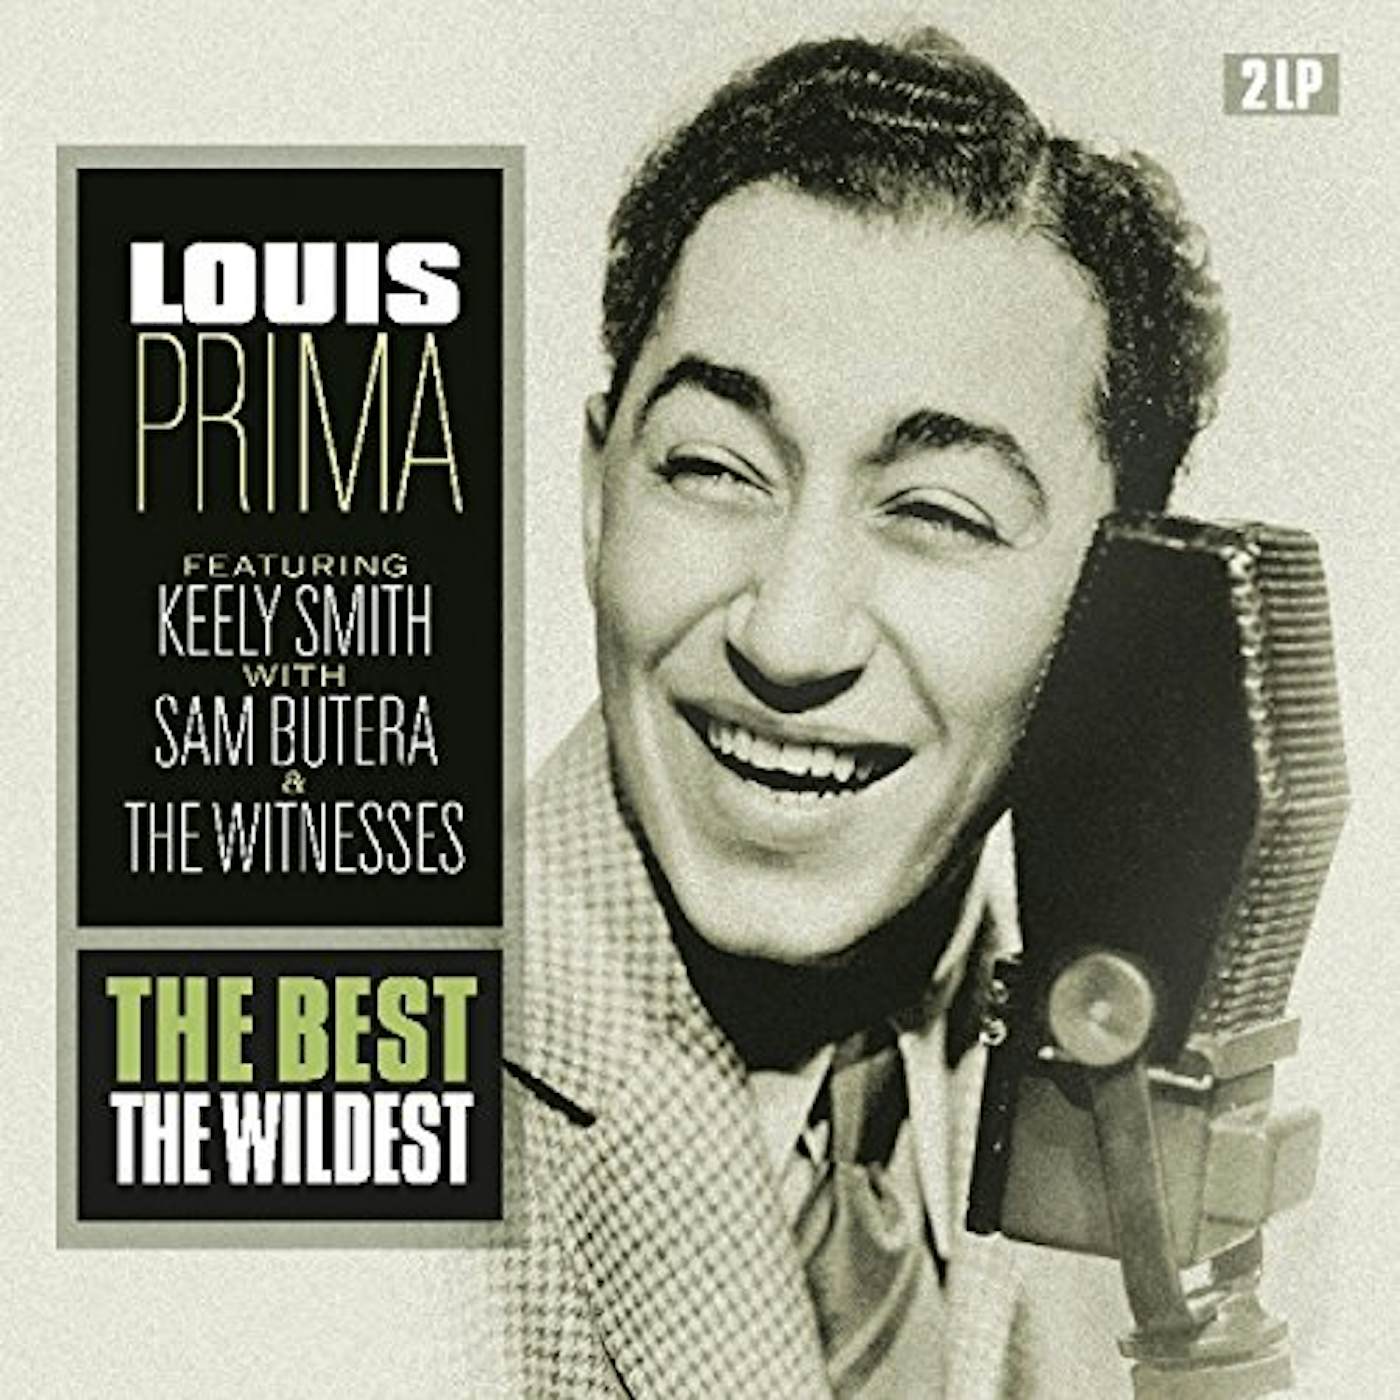 Louis Prima WONDERLAND BY NIGHT CD $18.99$16.99